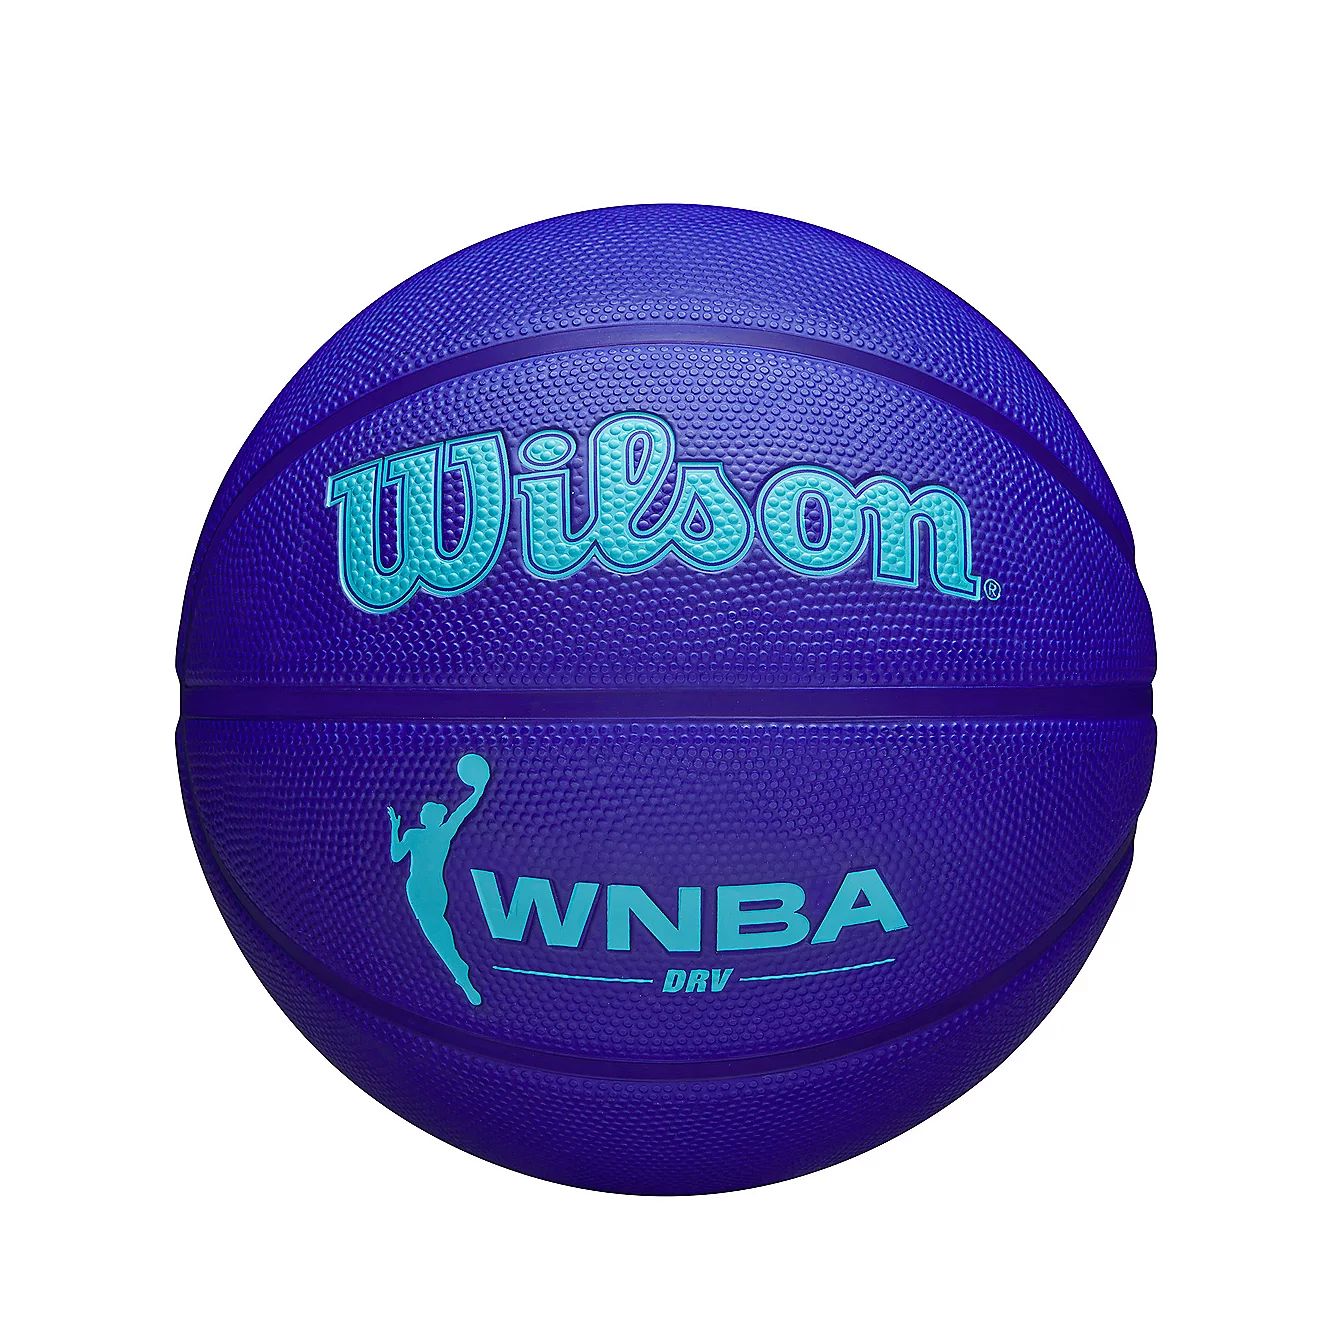 Wilson WNBA DRV Outdoor Basketball | Academy | Academy Sports + Outdoors